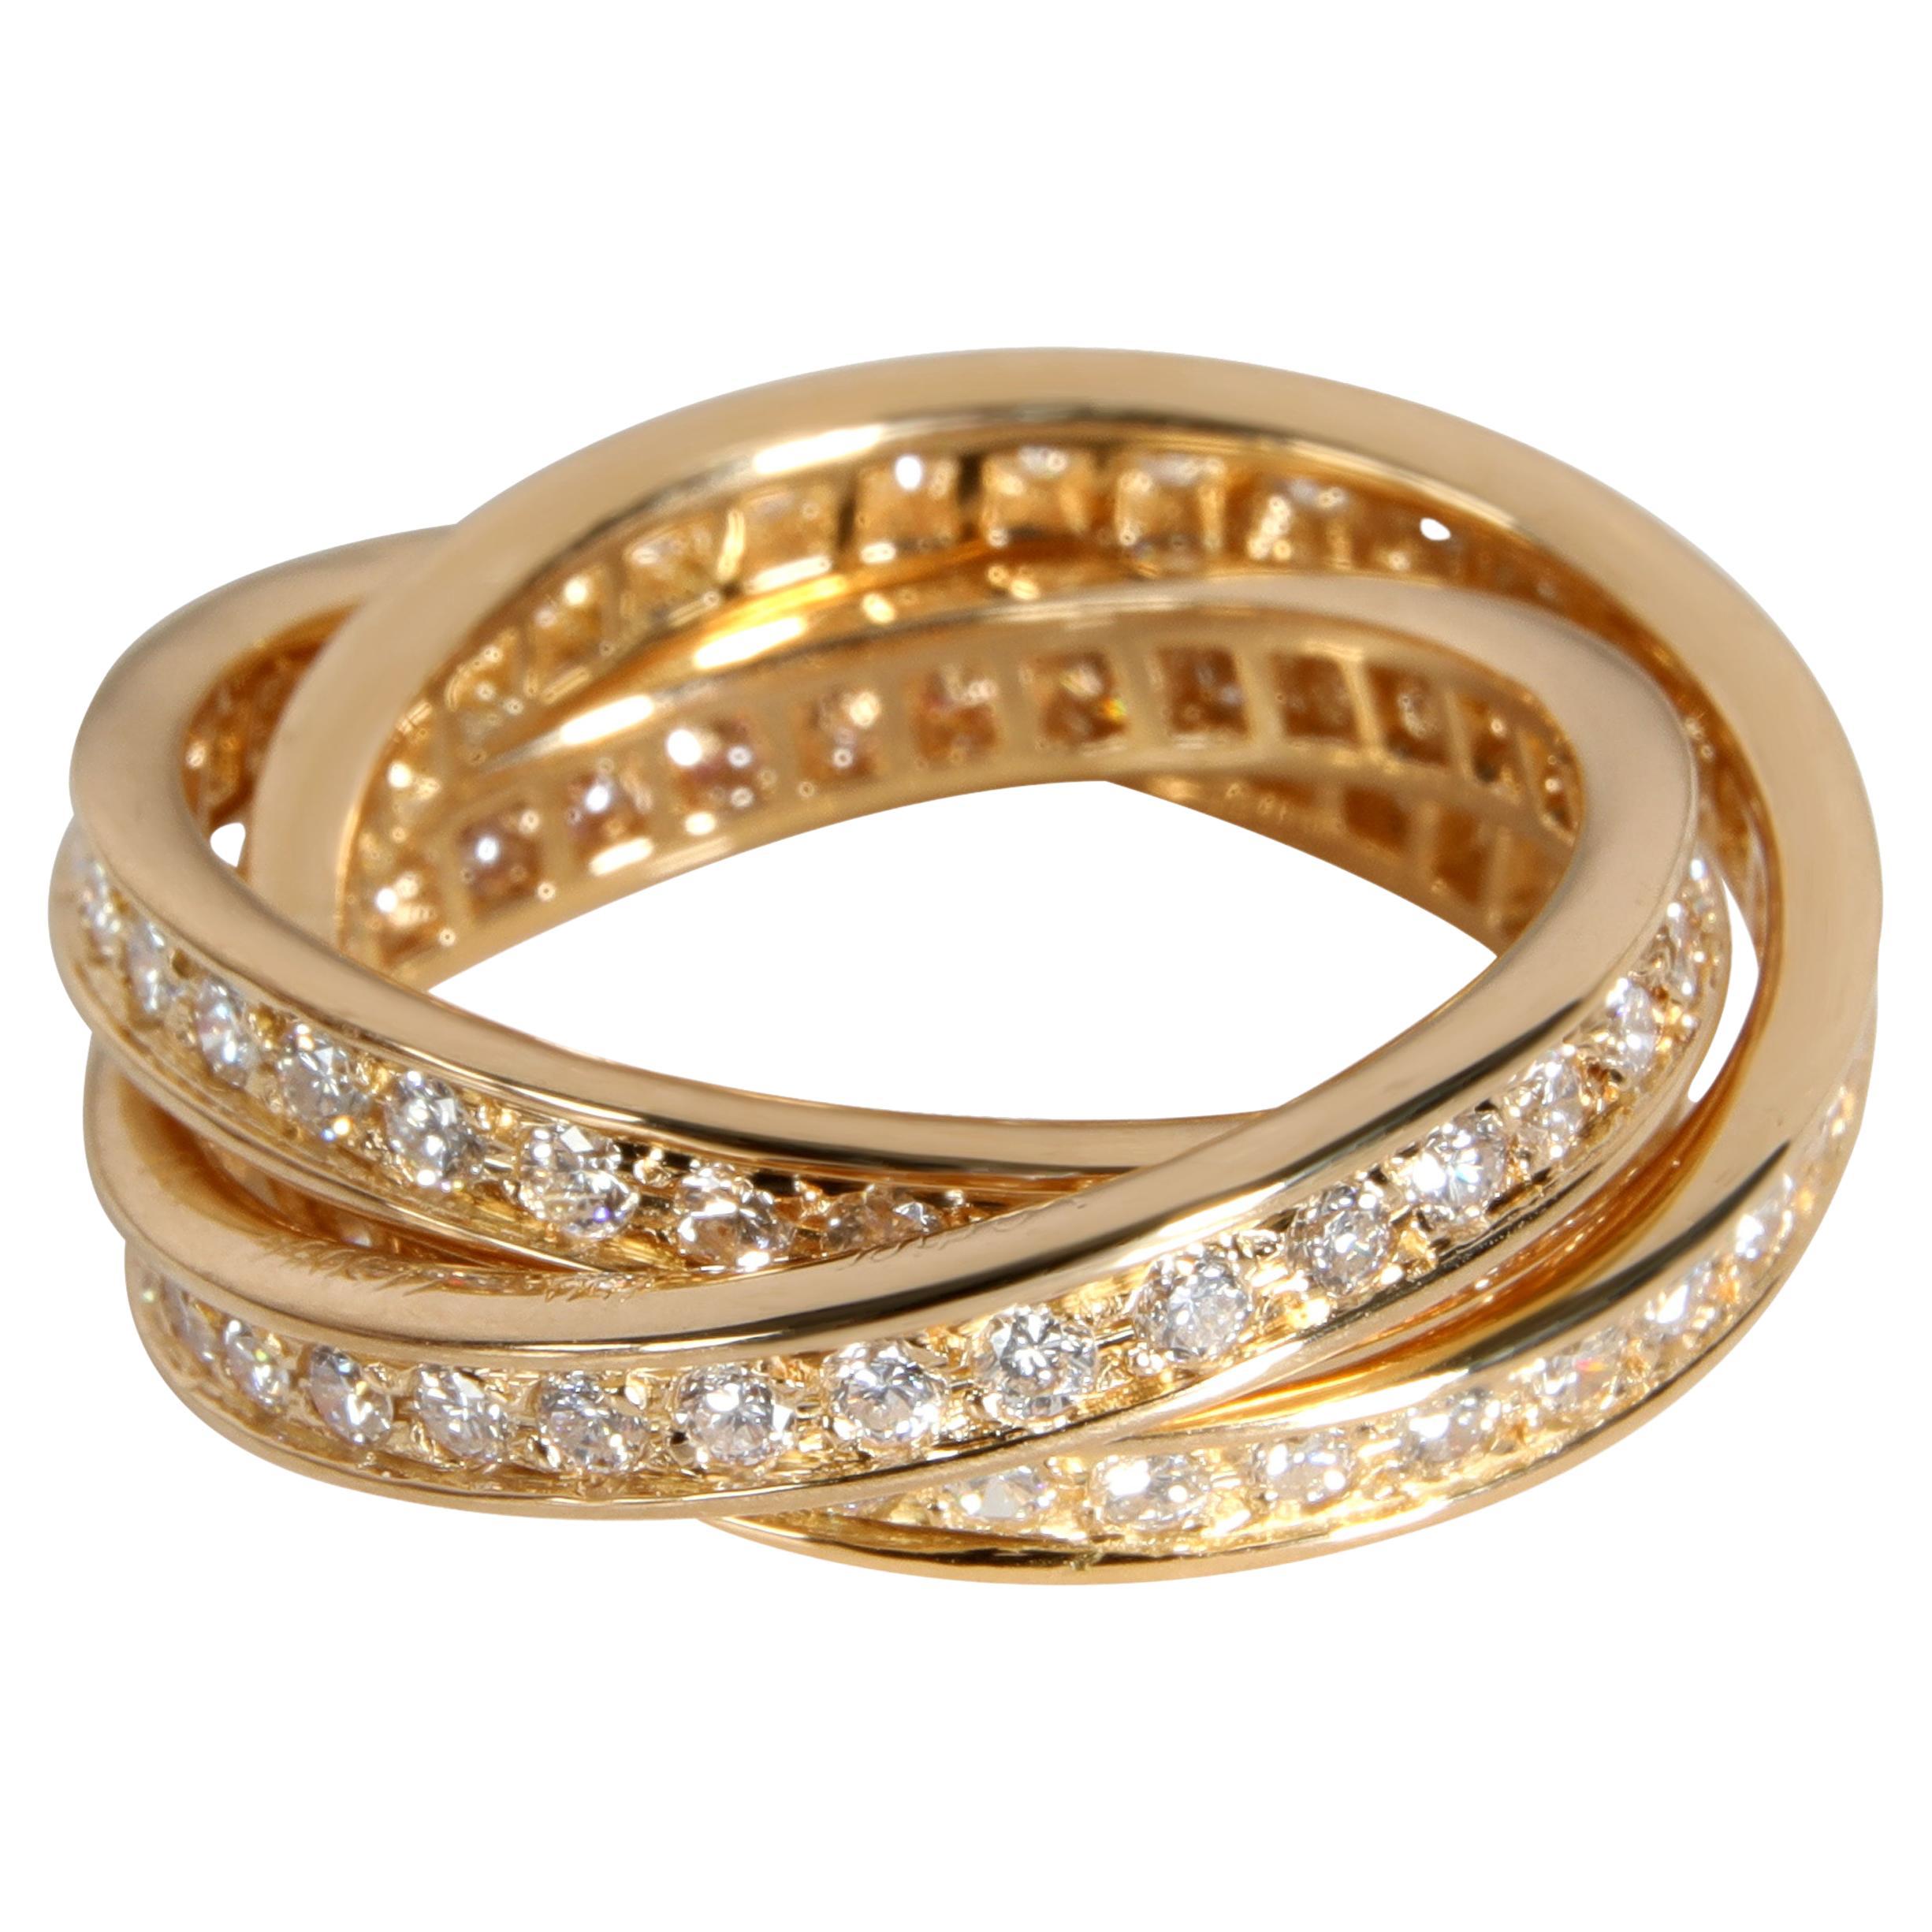 Cartier Trinity Diamond Ring in 18K Yellow Gold 1.5 CTW